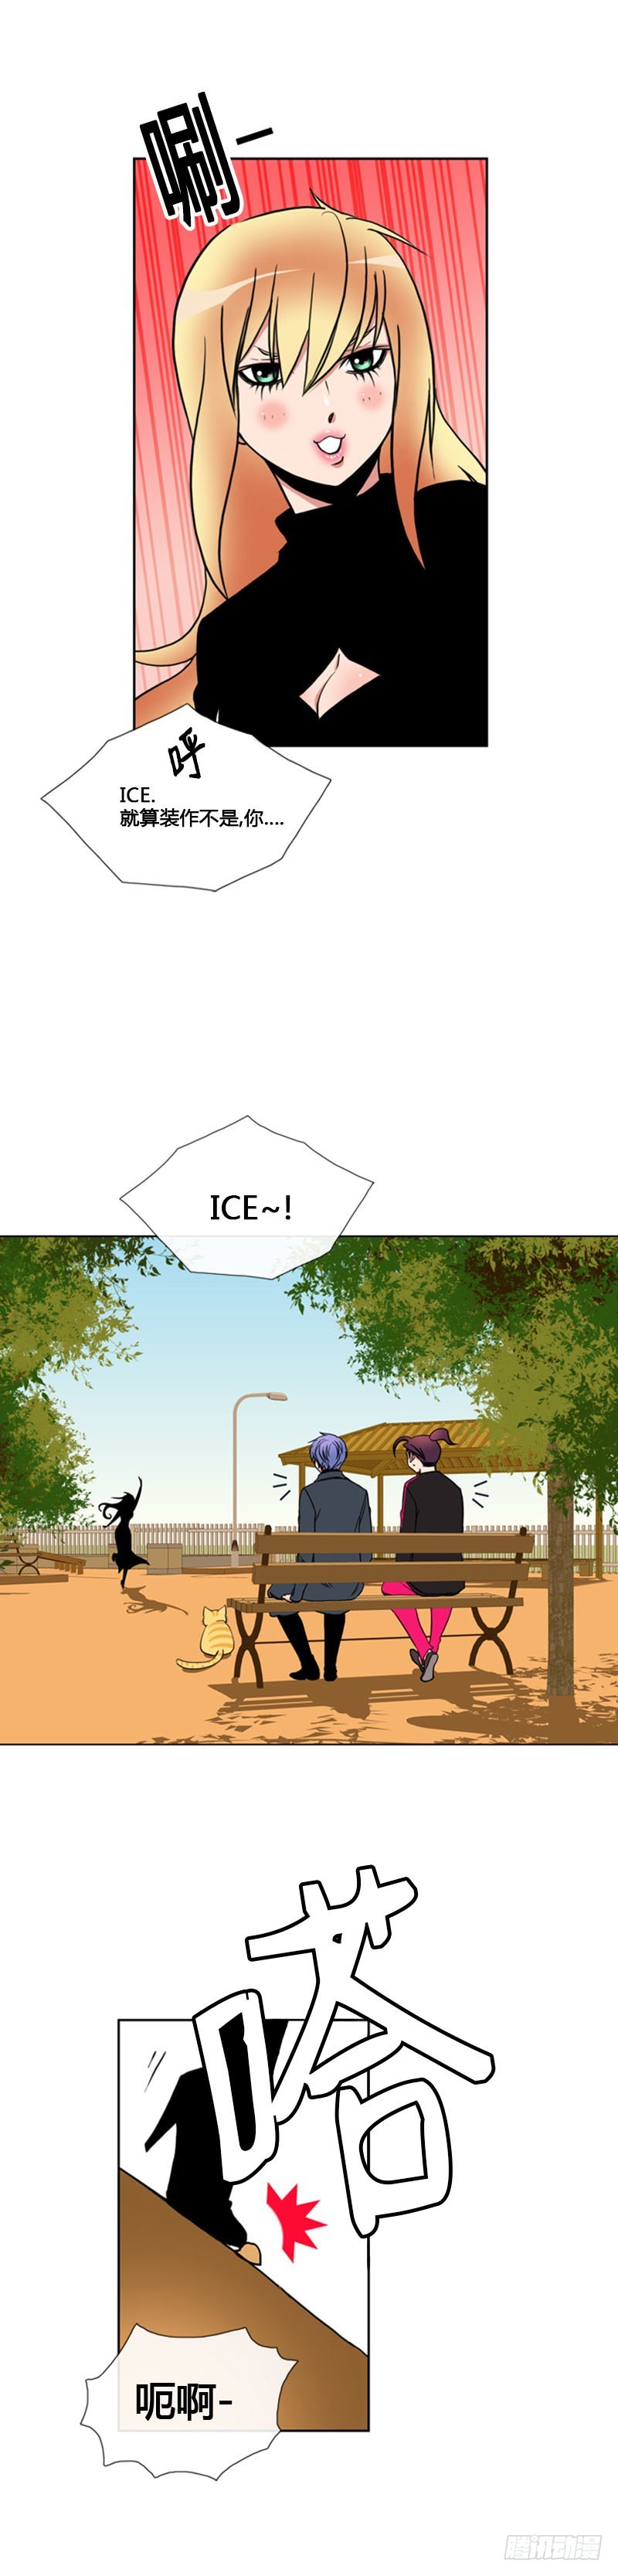 ICE-Cold人员的捡猫事件 - 第七十三话 - 1